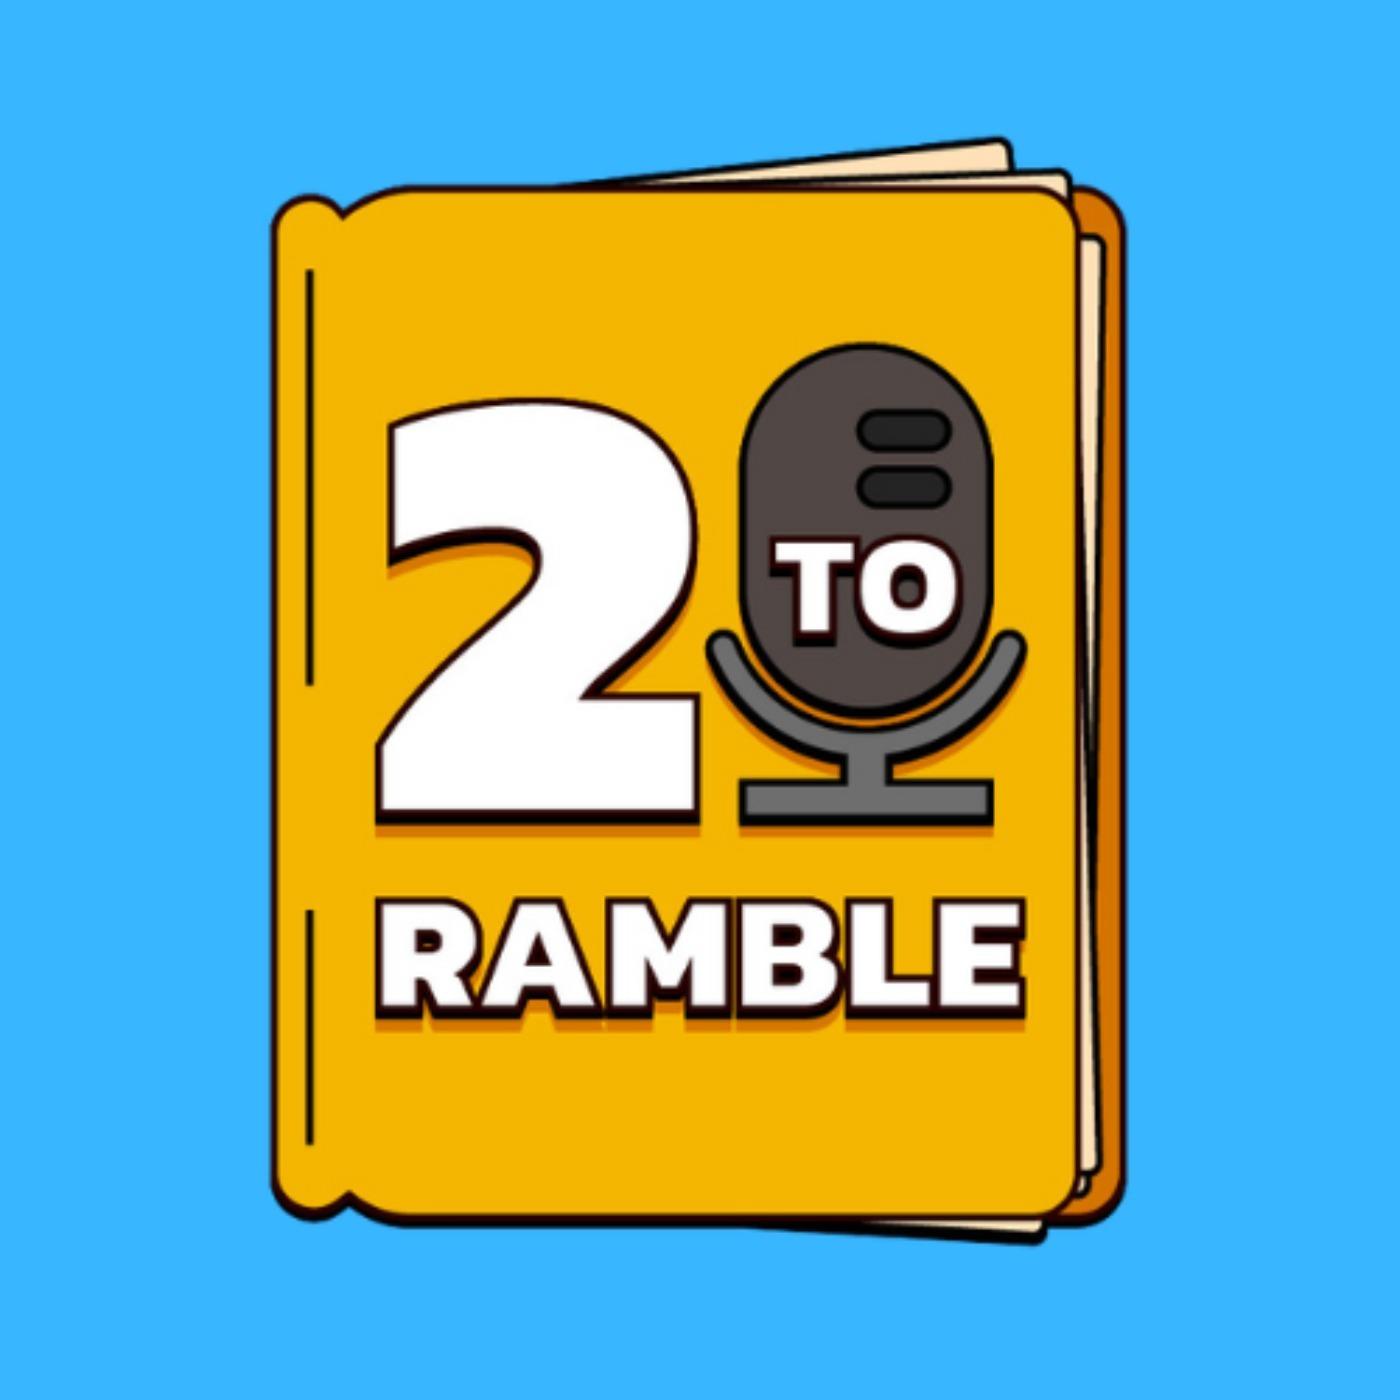 2 To Ramble